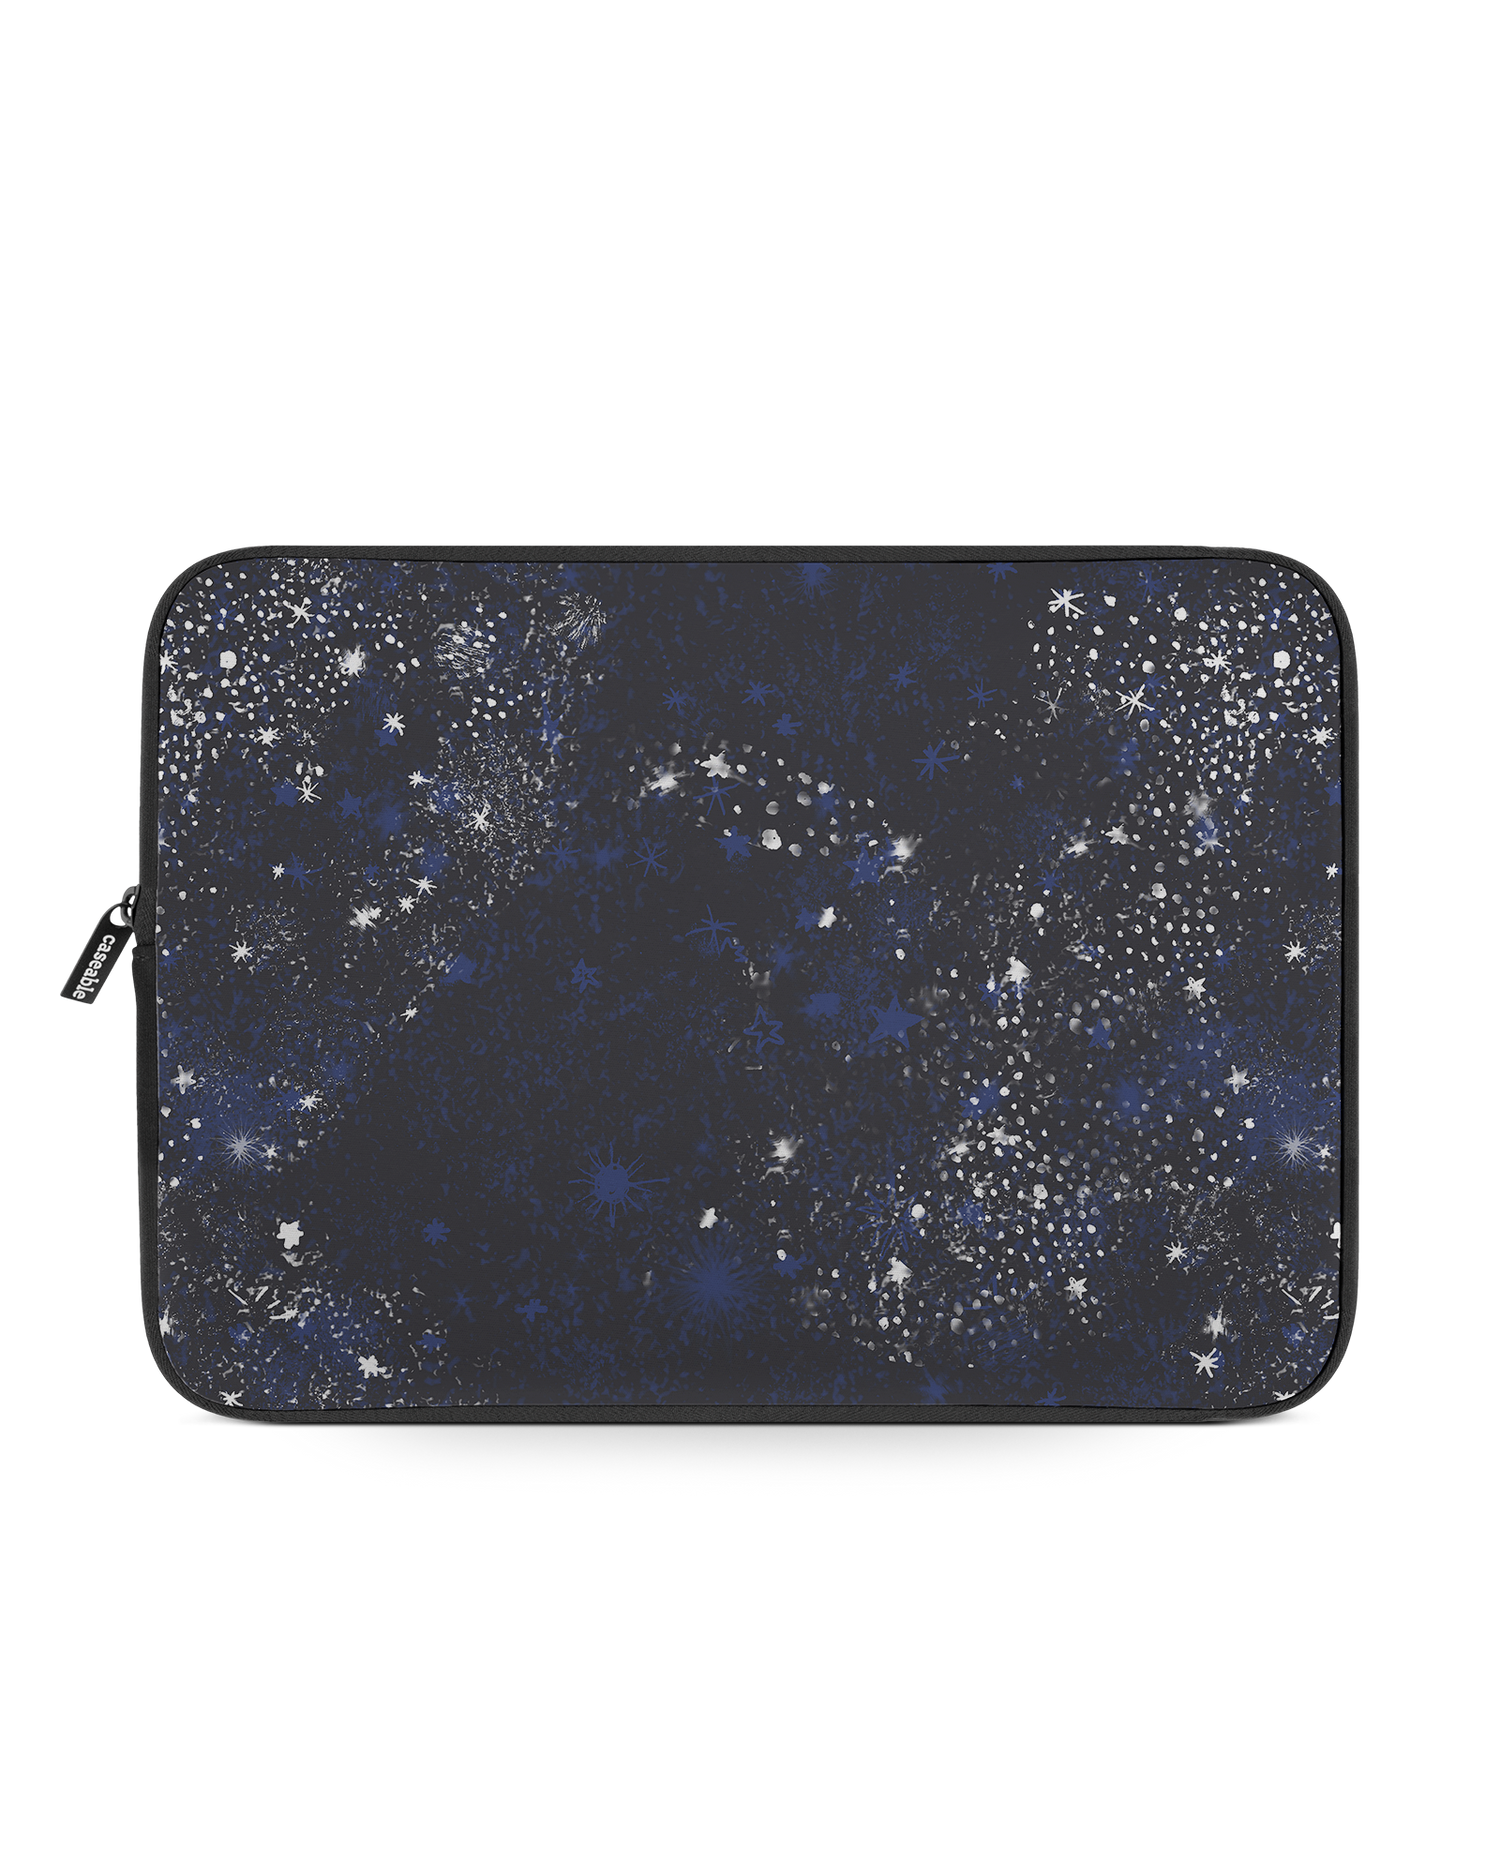 Starry Night Sky Laptophülle 13-14 Zoll: Vorderansicht